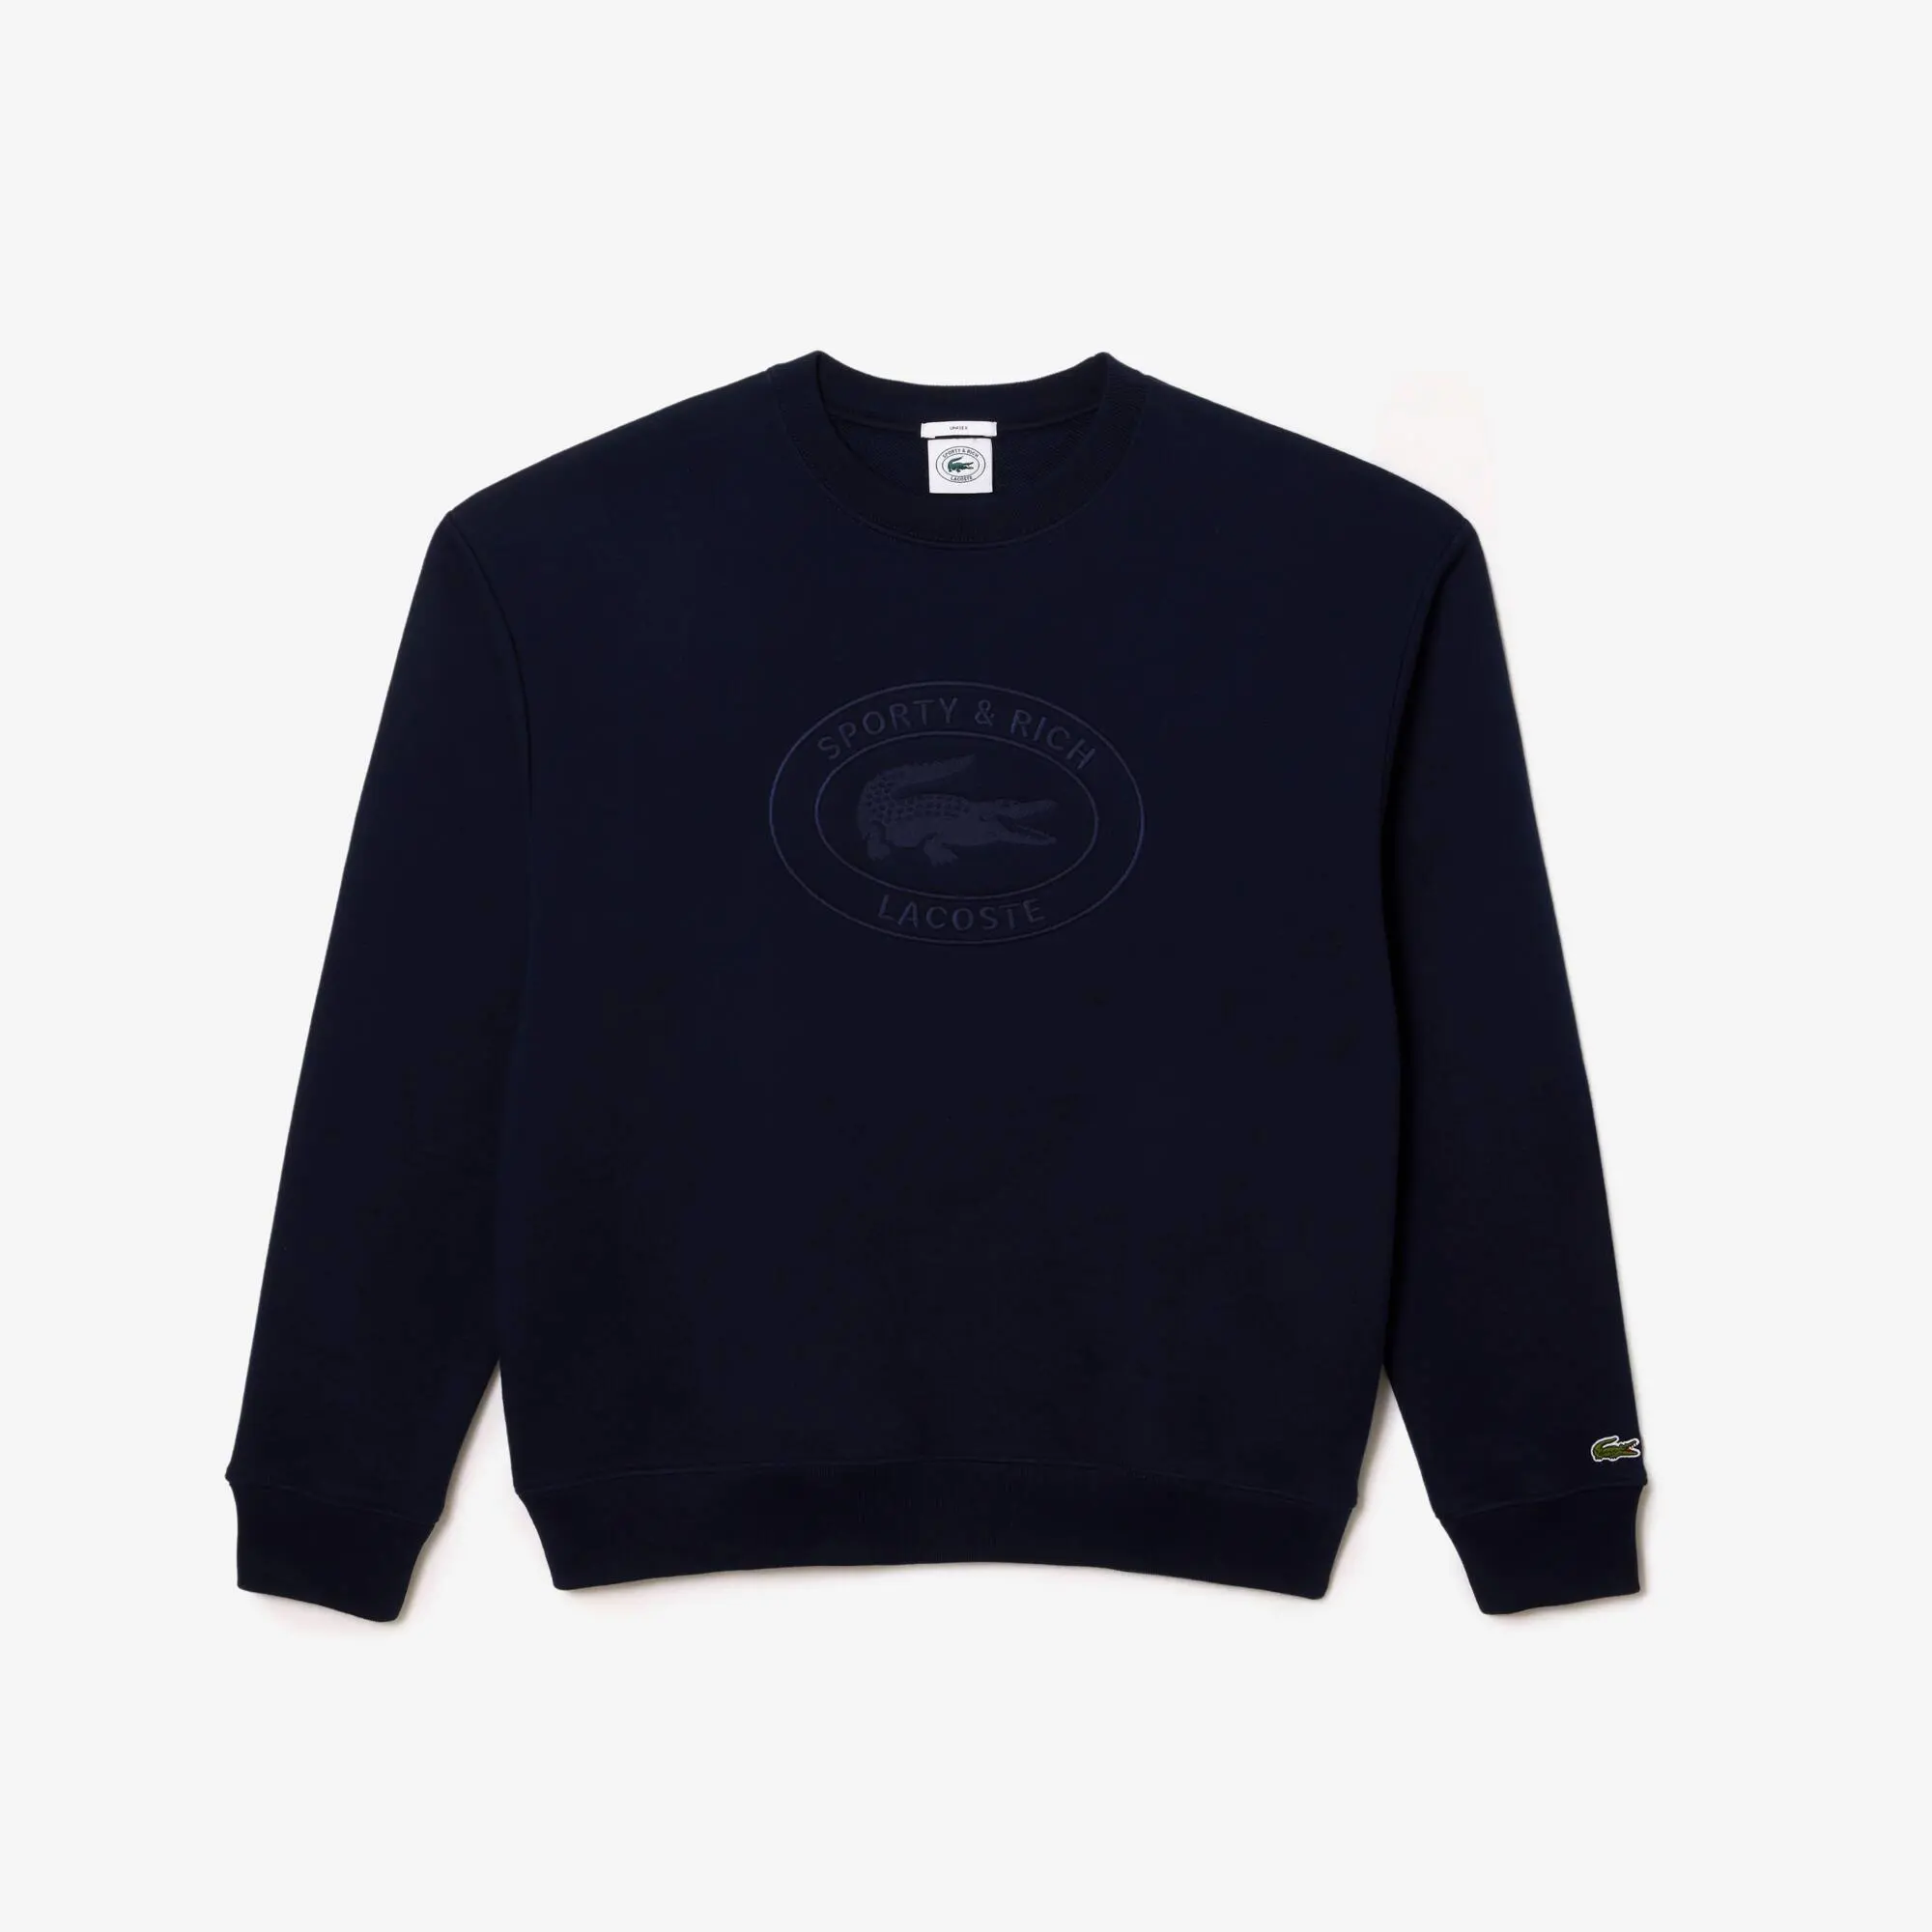 Lacoste Sweatshirt com bordado Lacoste x Sporty & Rich. 2